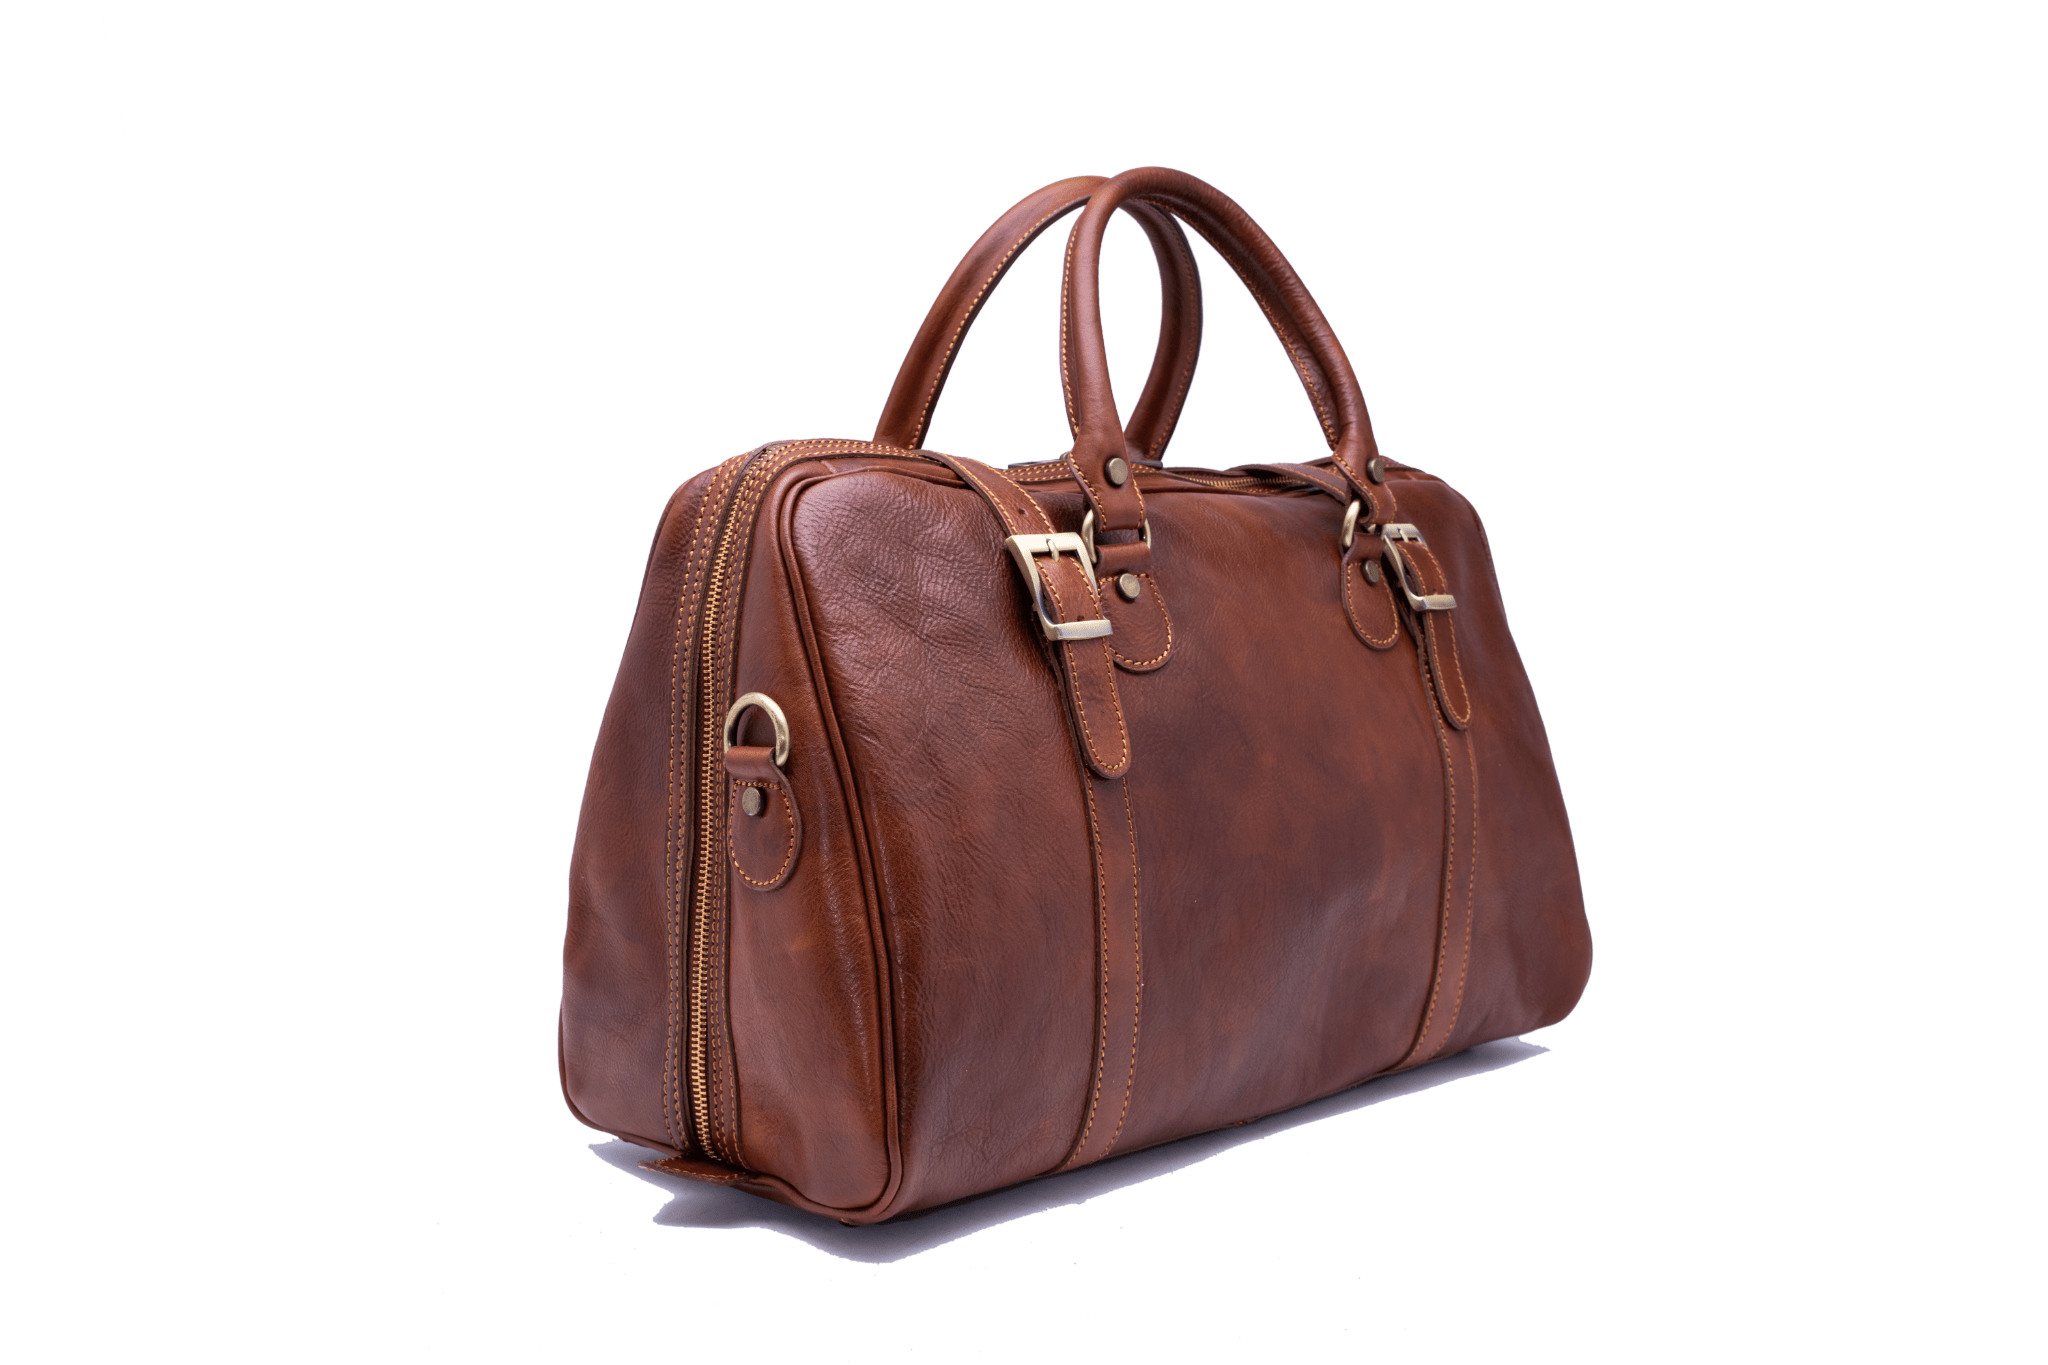 Leather Travel luggage double handle